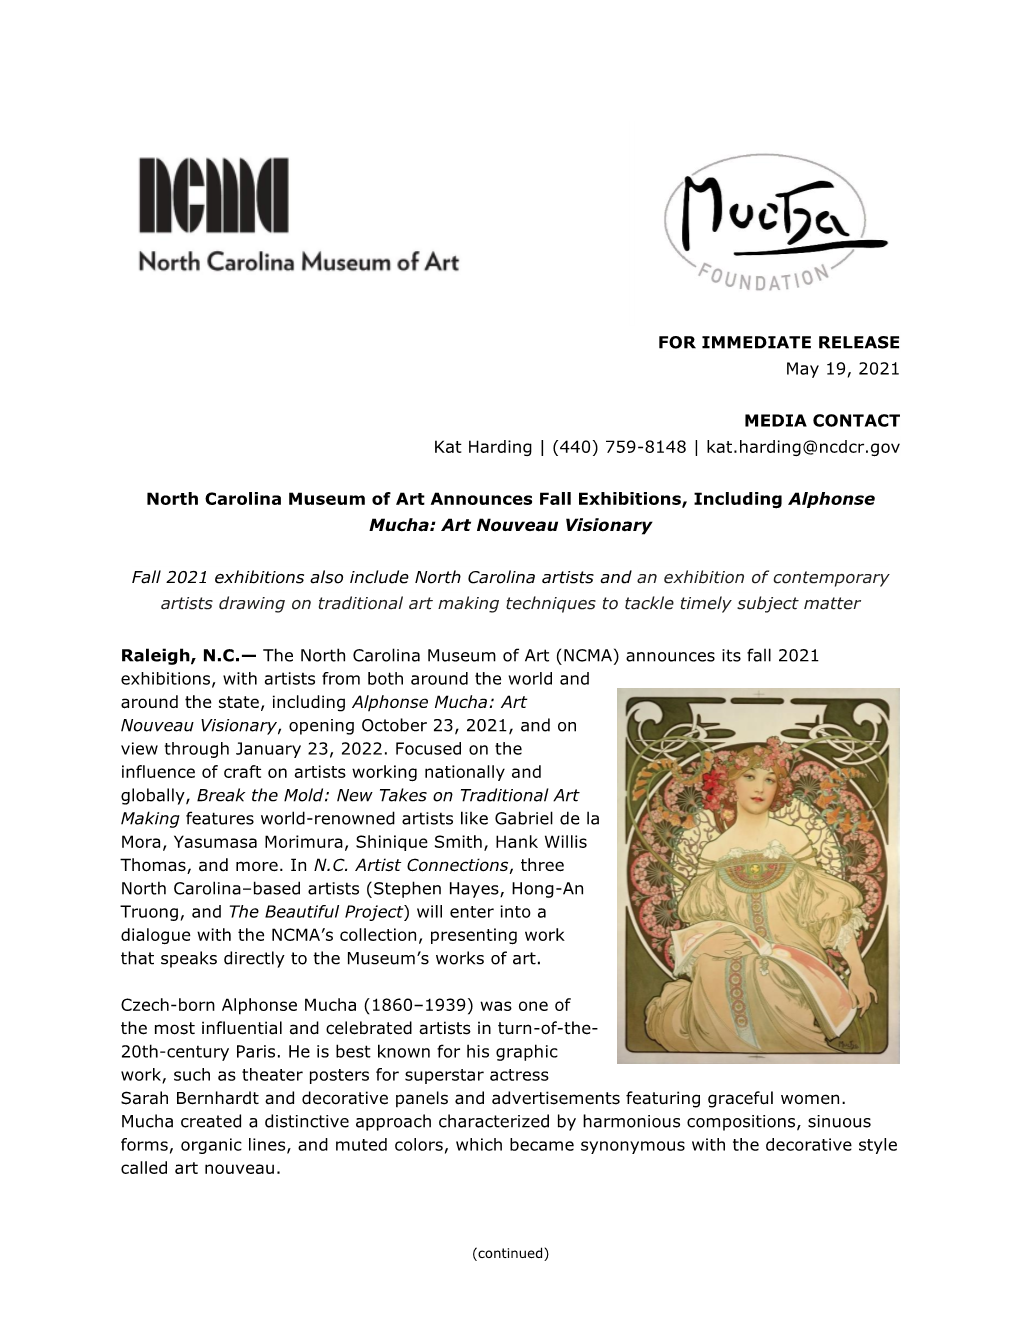 North Carolina Museum of Art Announces Fall Exhibitions, Including Alphonse Mucha: Art Nouveau Visionary